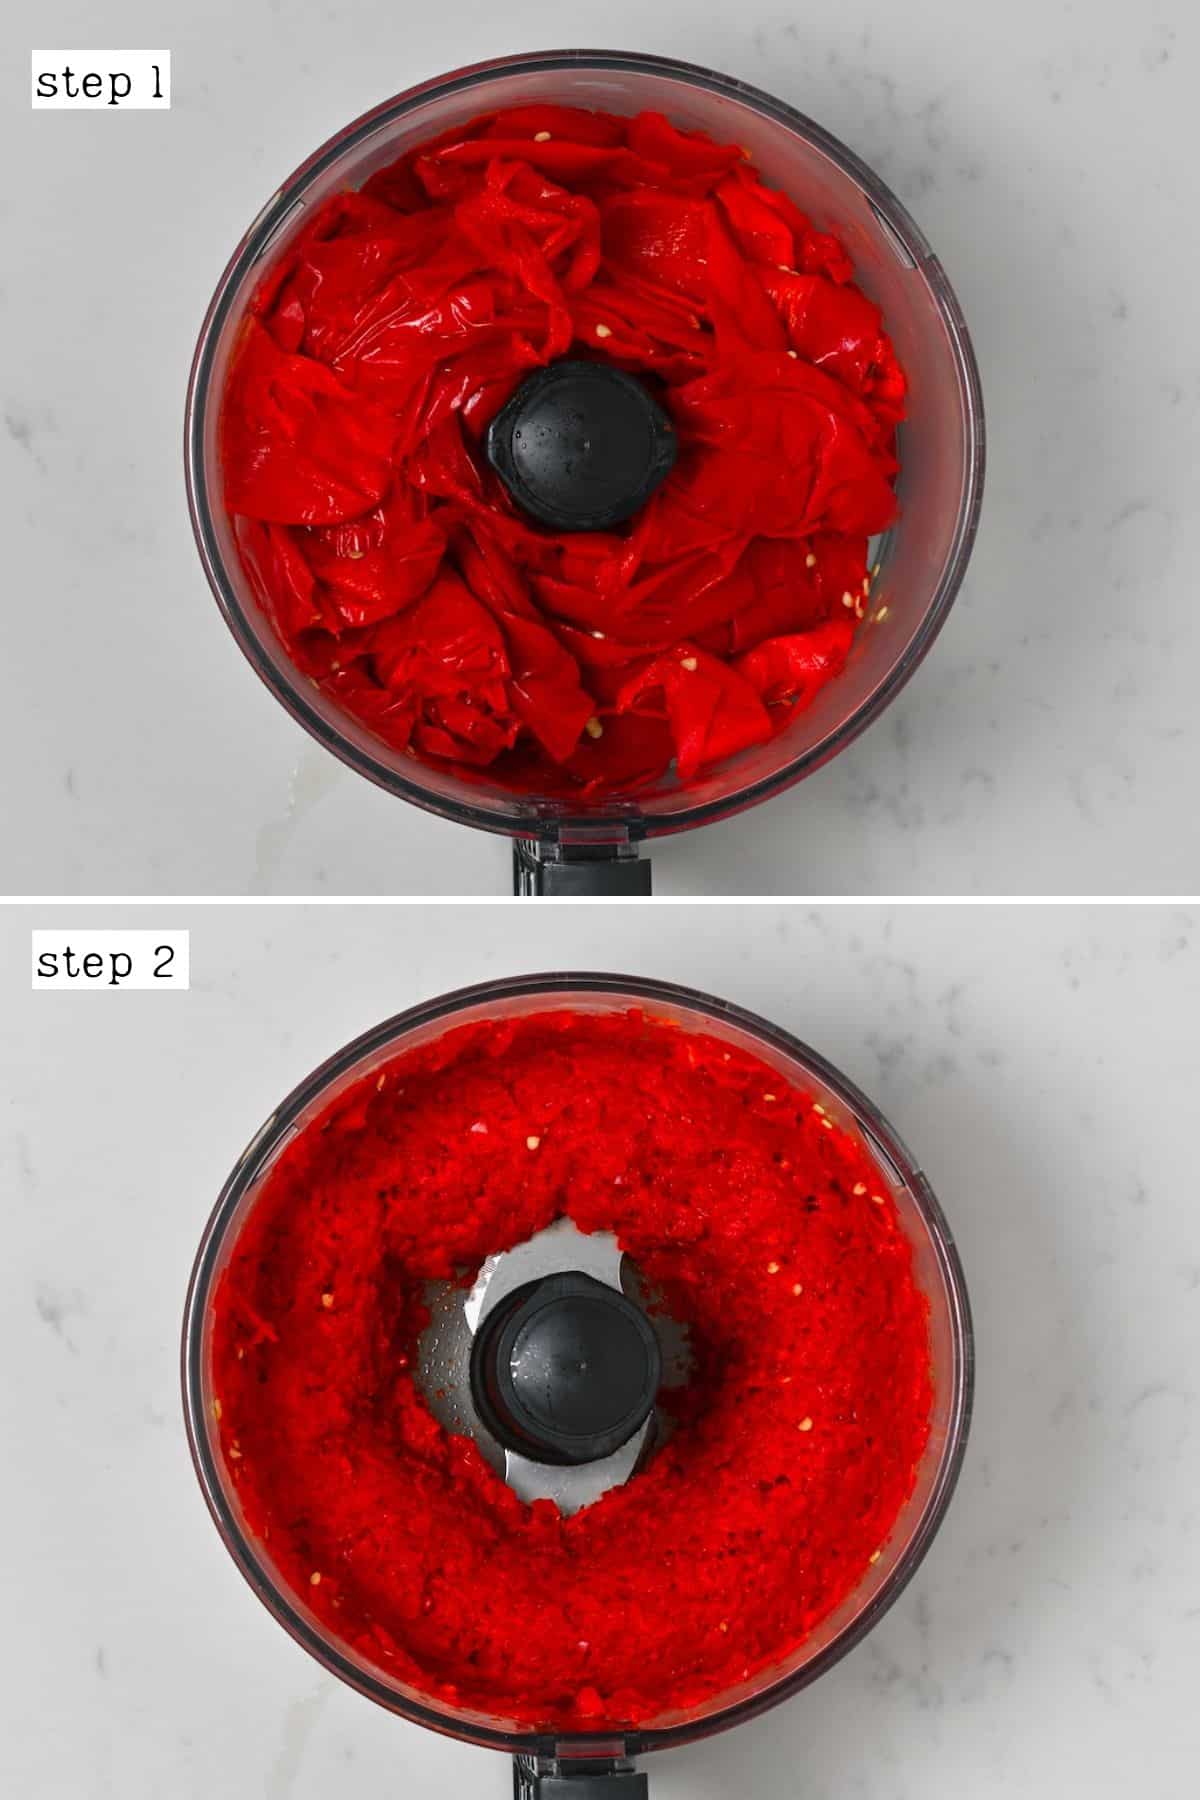 Steps for making red pepper paste